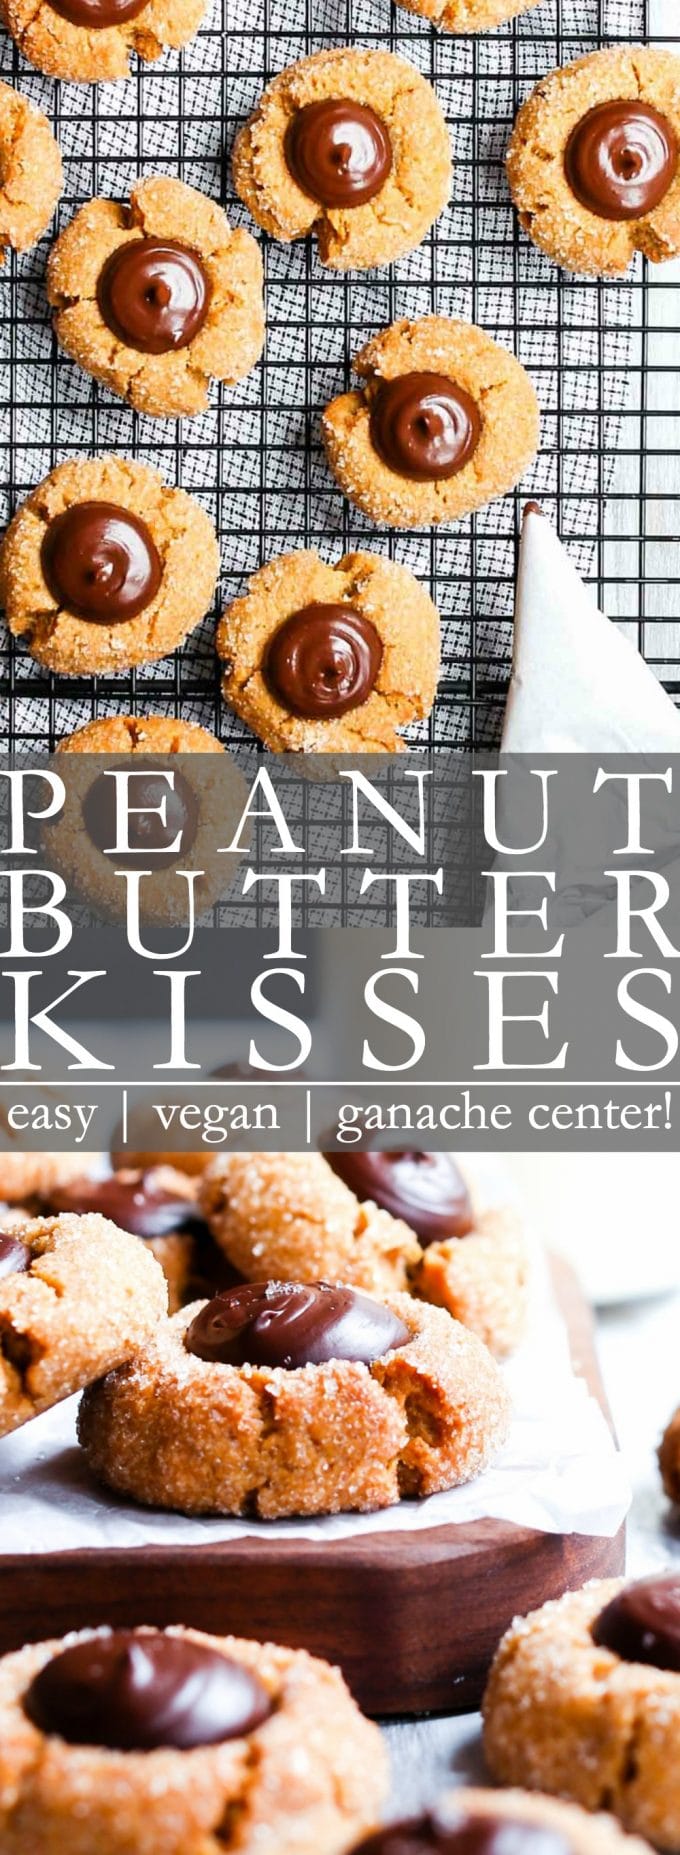 Vegan Peanut Butter Kisses